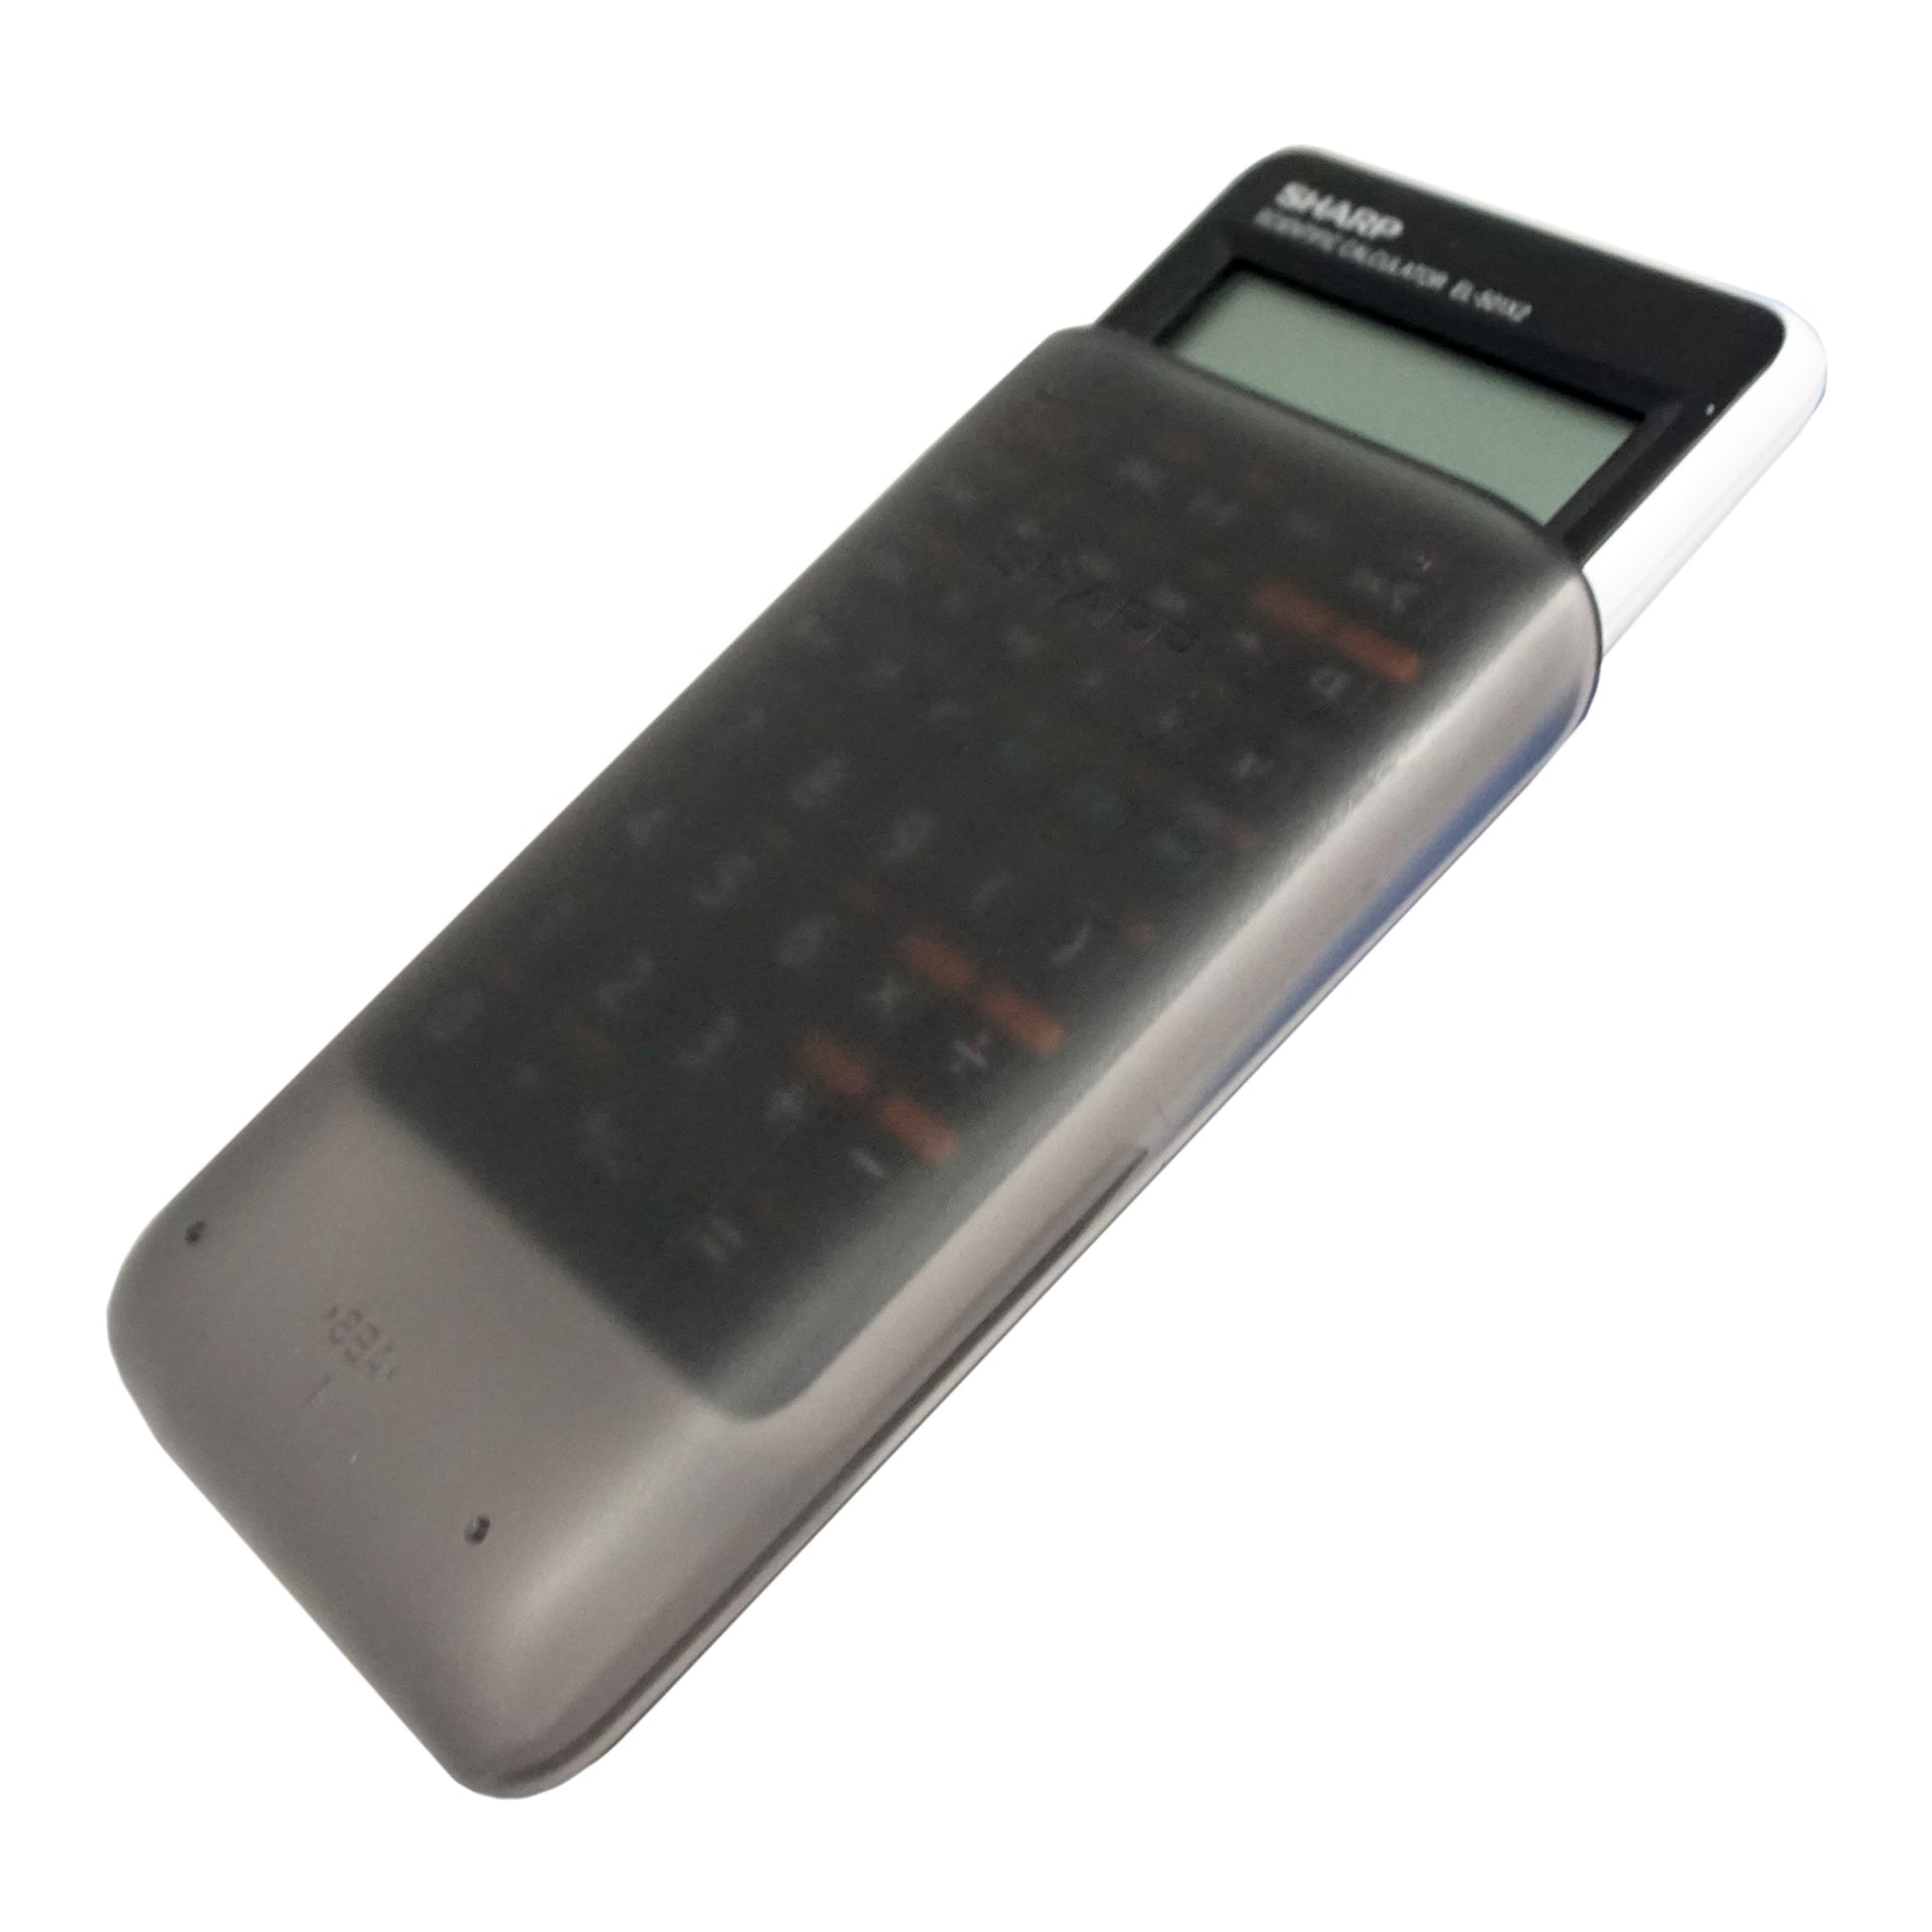 black basic scientific calculator with sliding hard cover